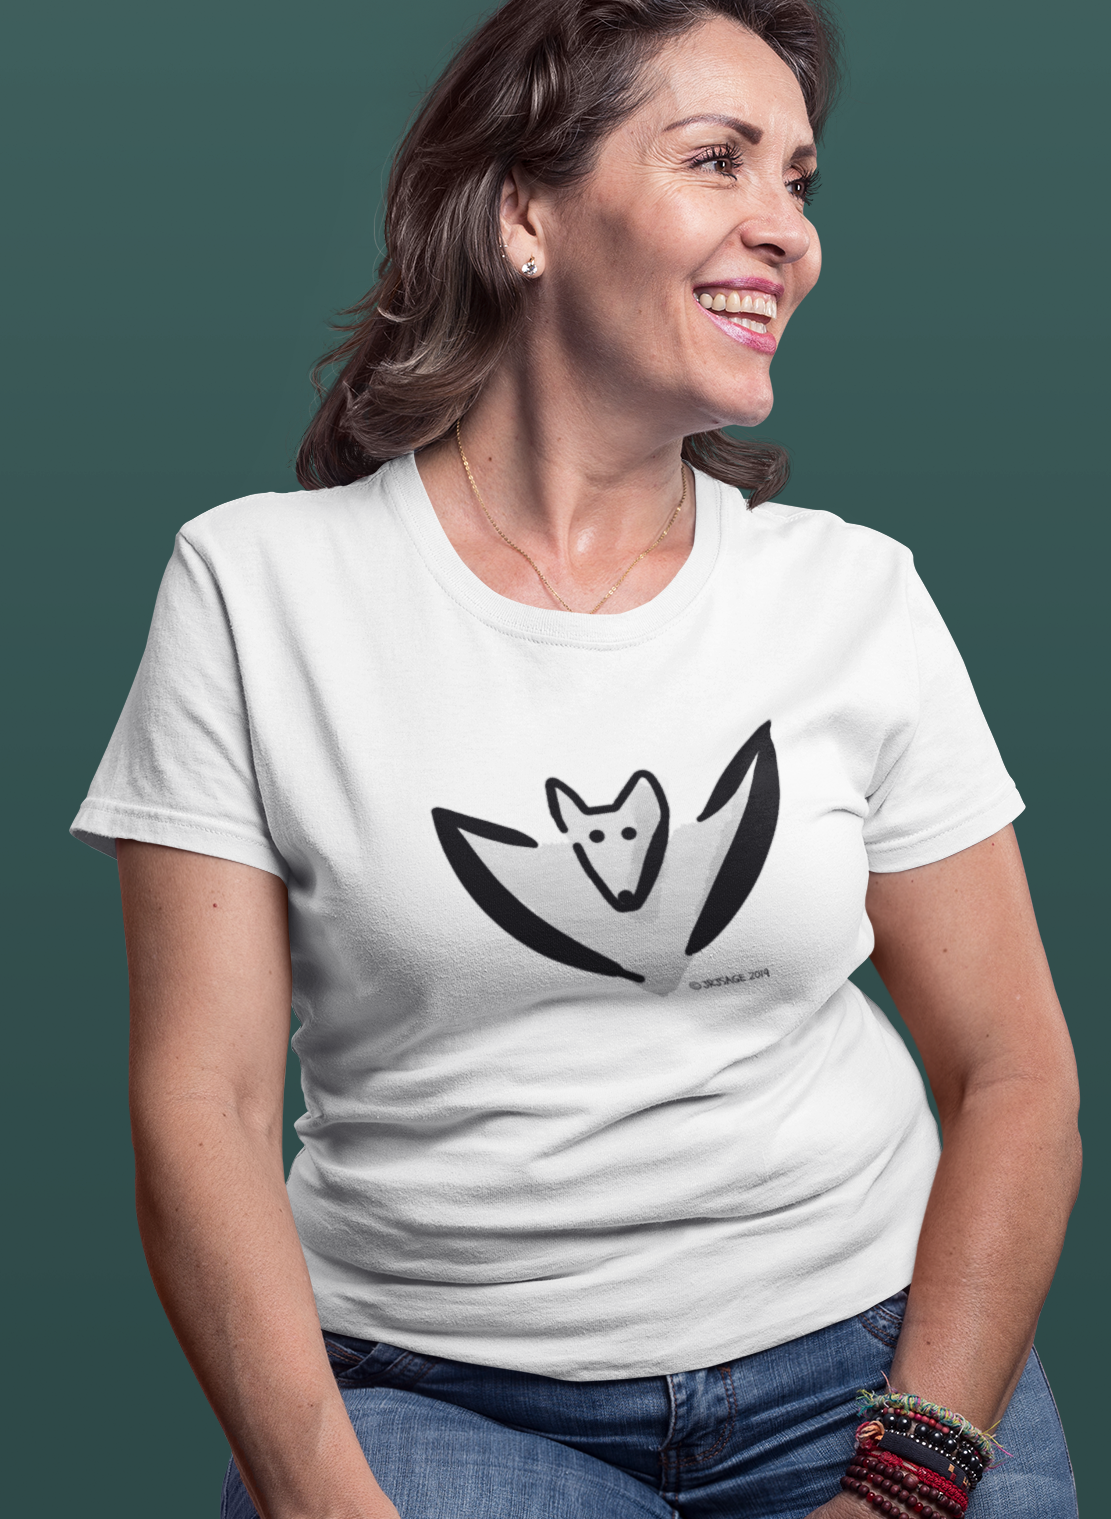 Vampire Bat T-shirt - A happy woman wearing a cute Halloween Bertie Bat original illustrated design on a Hector and Bone quality cotton t-shirt